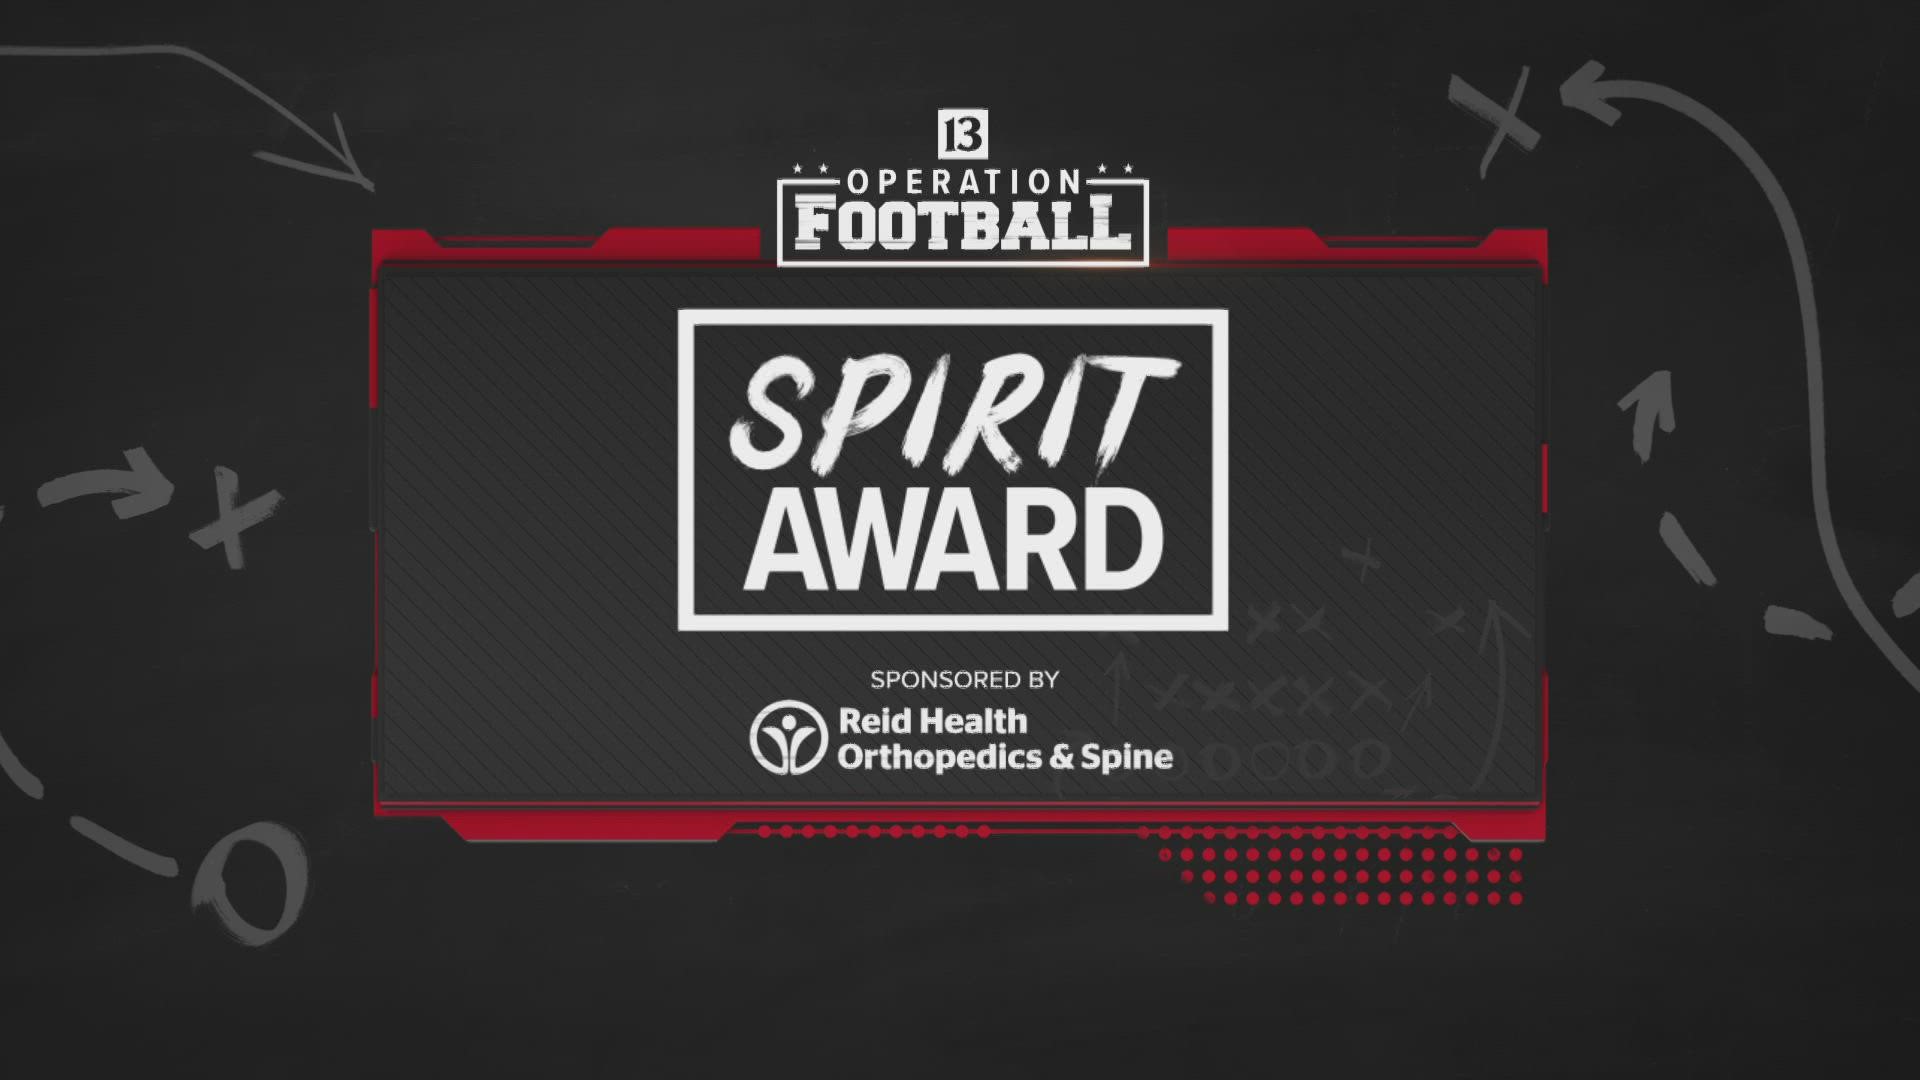 Brownsburg High School has won the 2021 Operation Football Spirit Award.